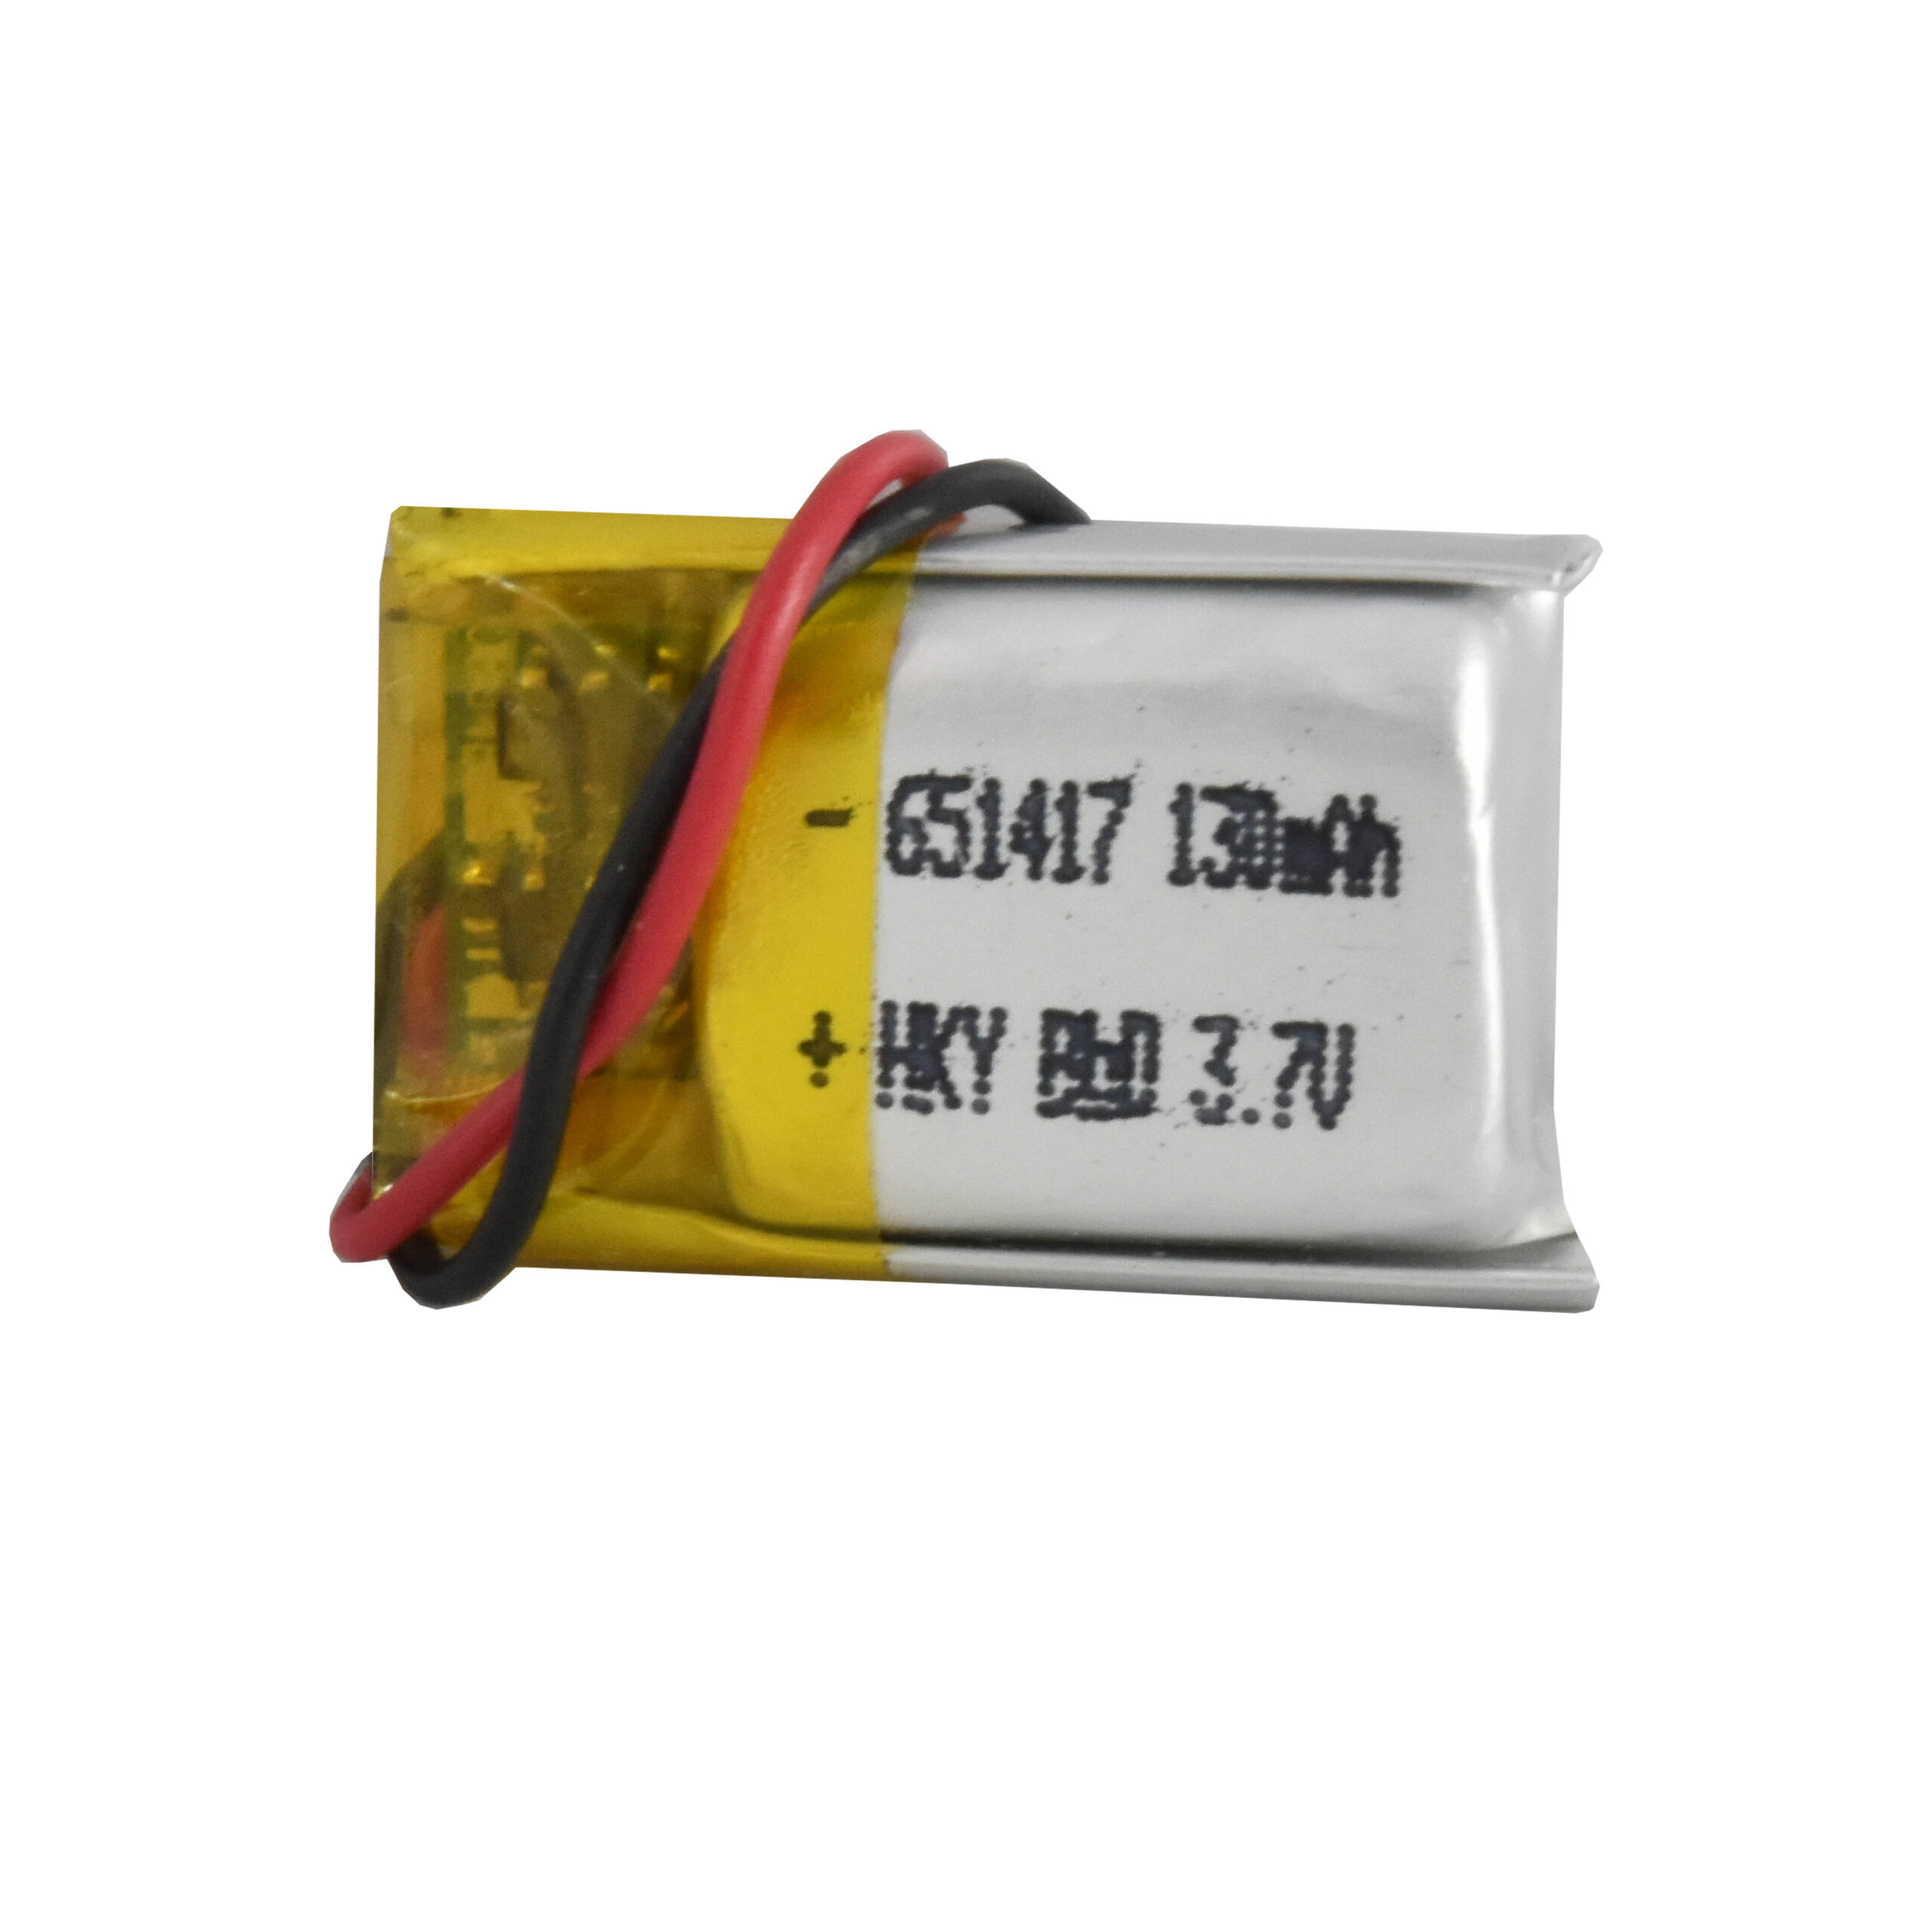 باتری لیتیوم پلیمر 3.7v ظرفیت 130mA ابعاد 651417